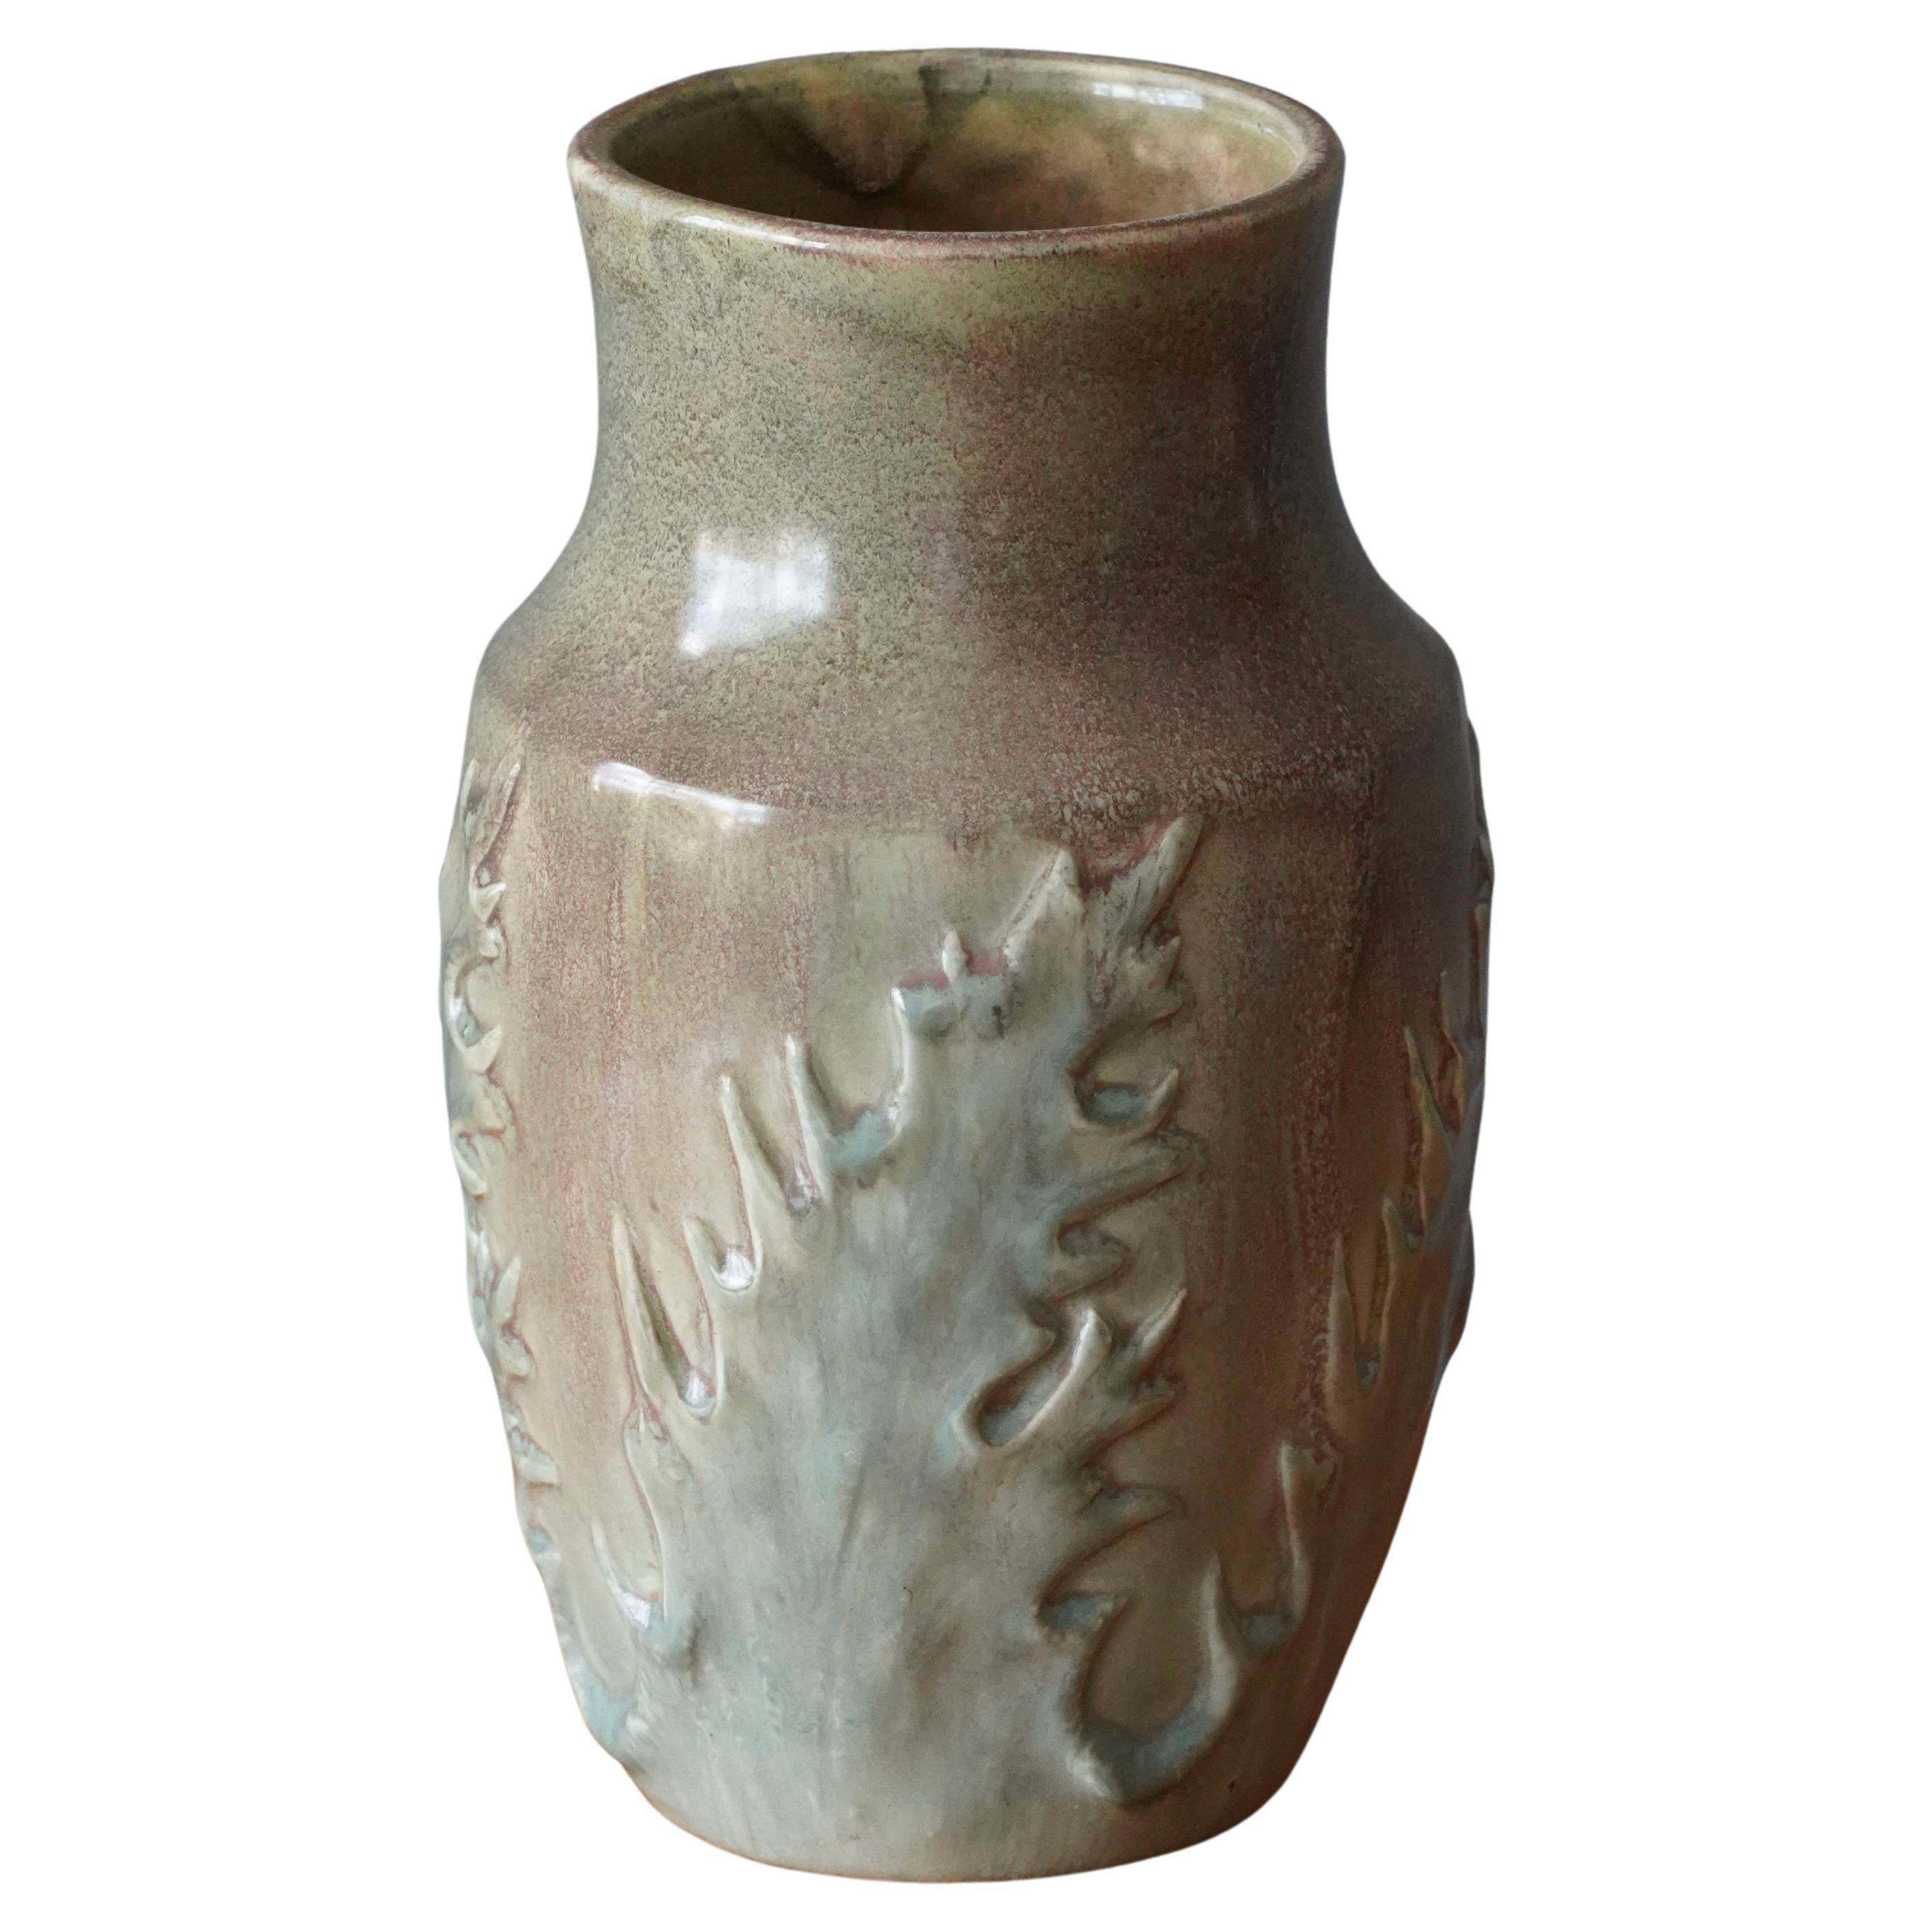 Höganas Keramik, Early Vase, Glazed Earthenware, Höganäs, Sweden, 1920s